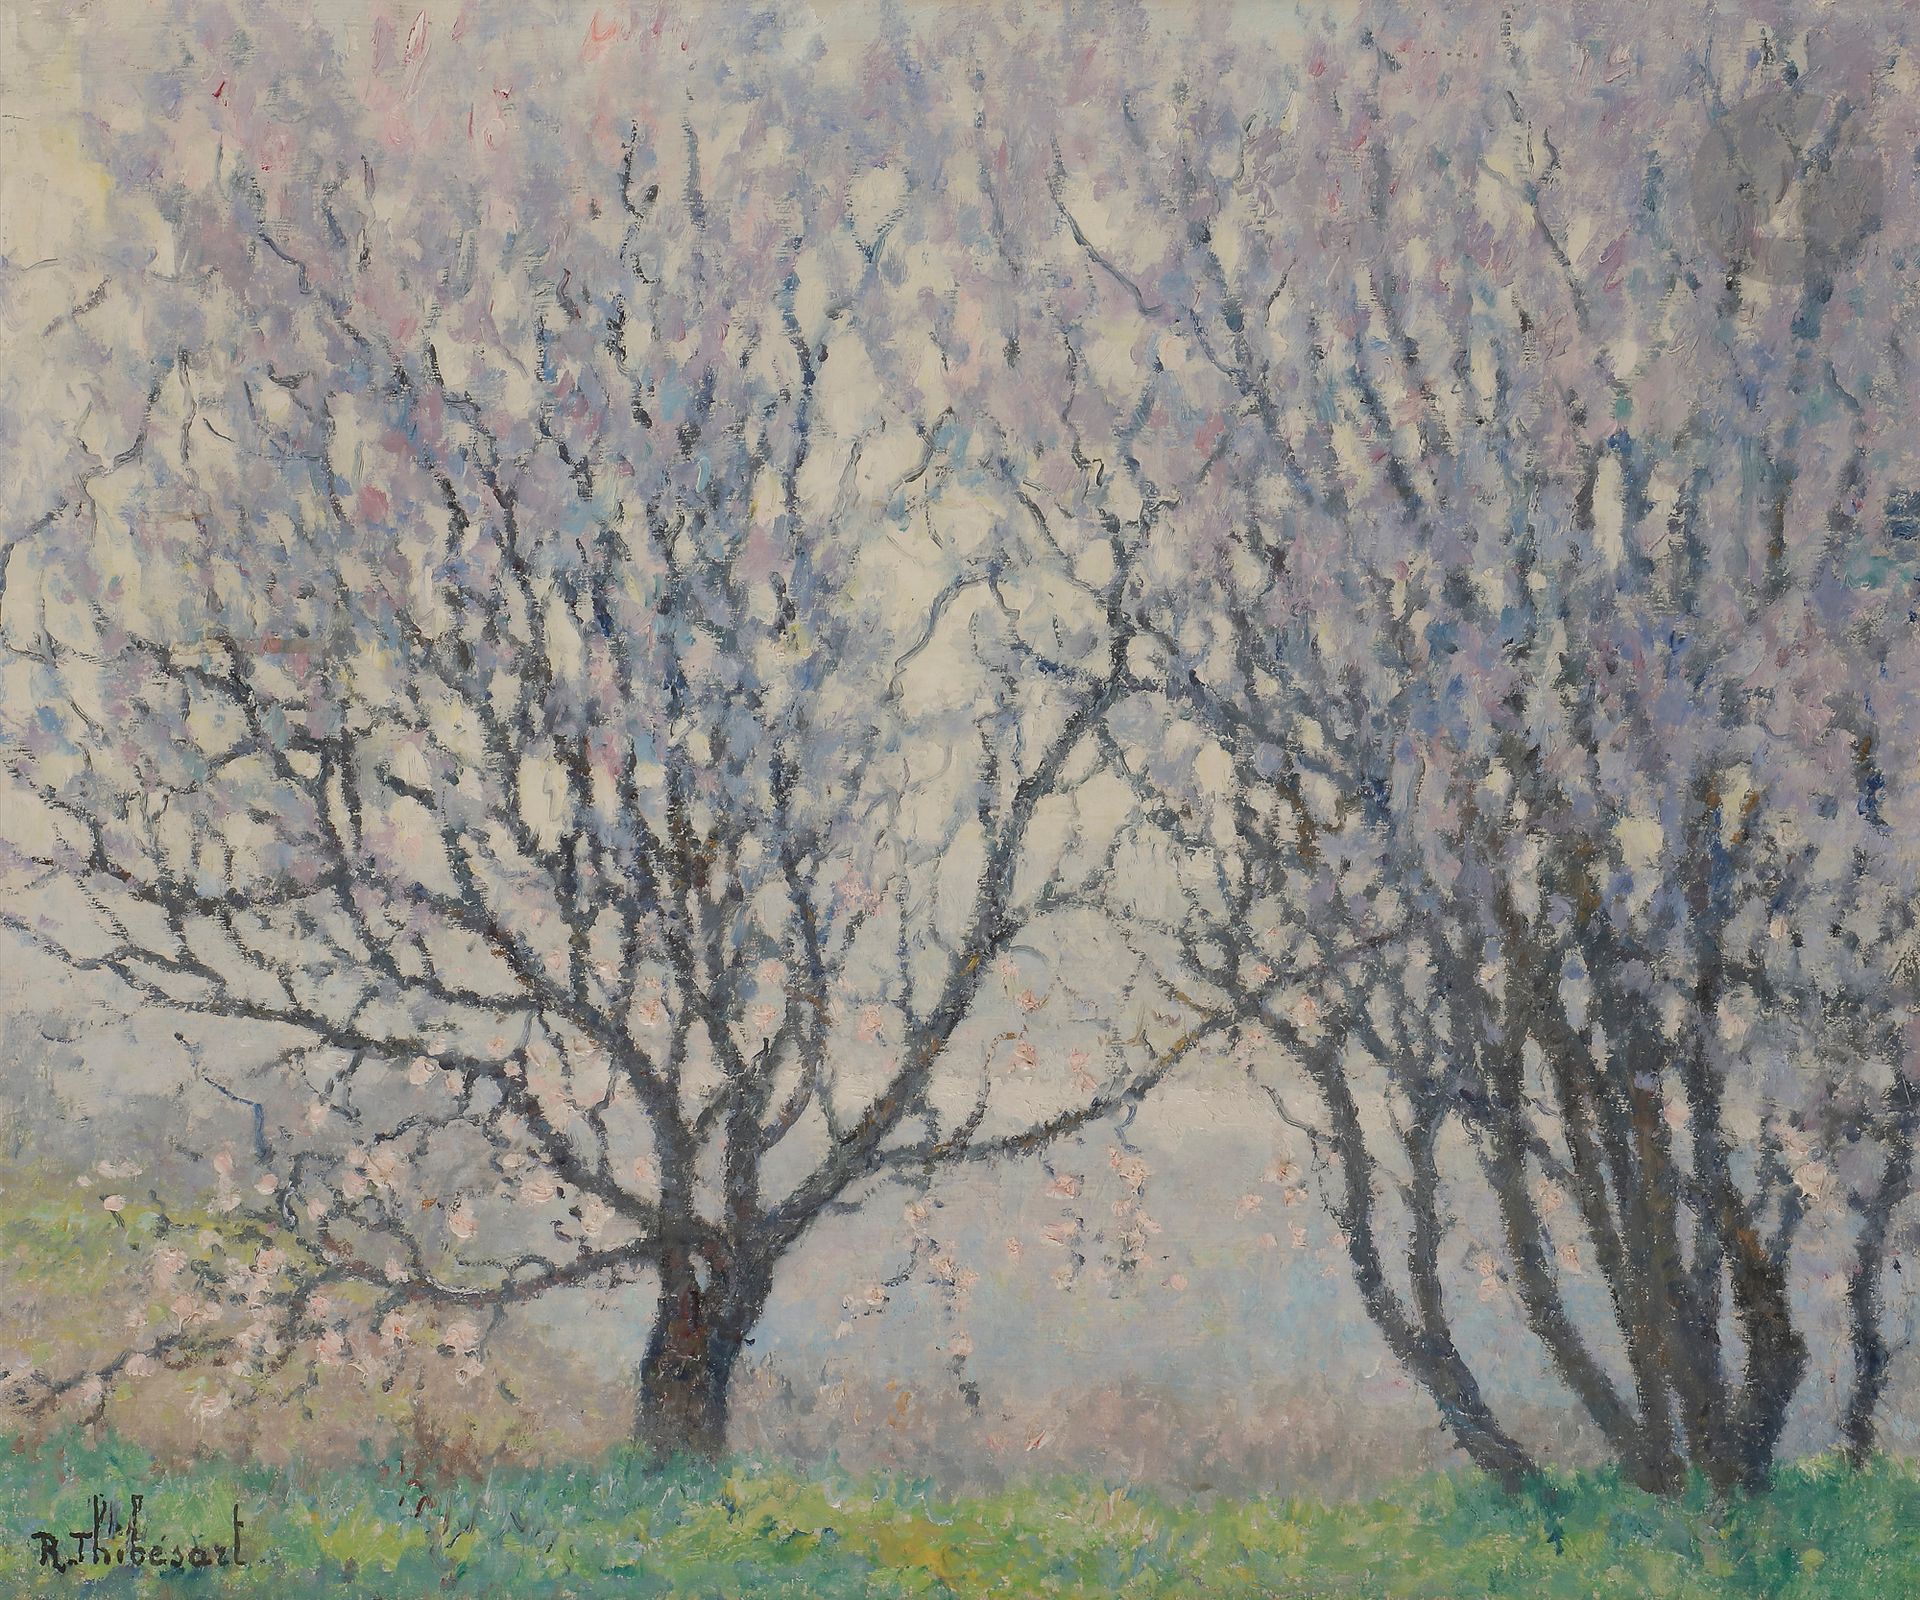 Null 雷蒙德-蒂贝沙特（1874-1968）《
盛开的树和塞纳河谷》，约1930年
布面油画

。
 
 
左下角有签名。
46 x 55 cm

出处：
&hellip;